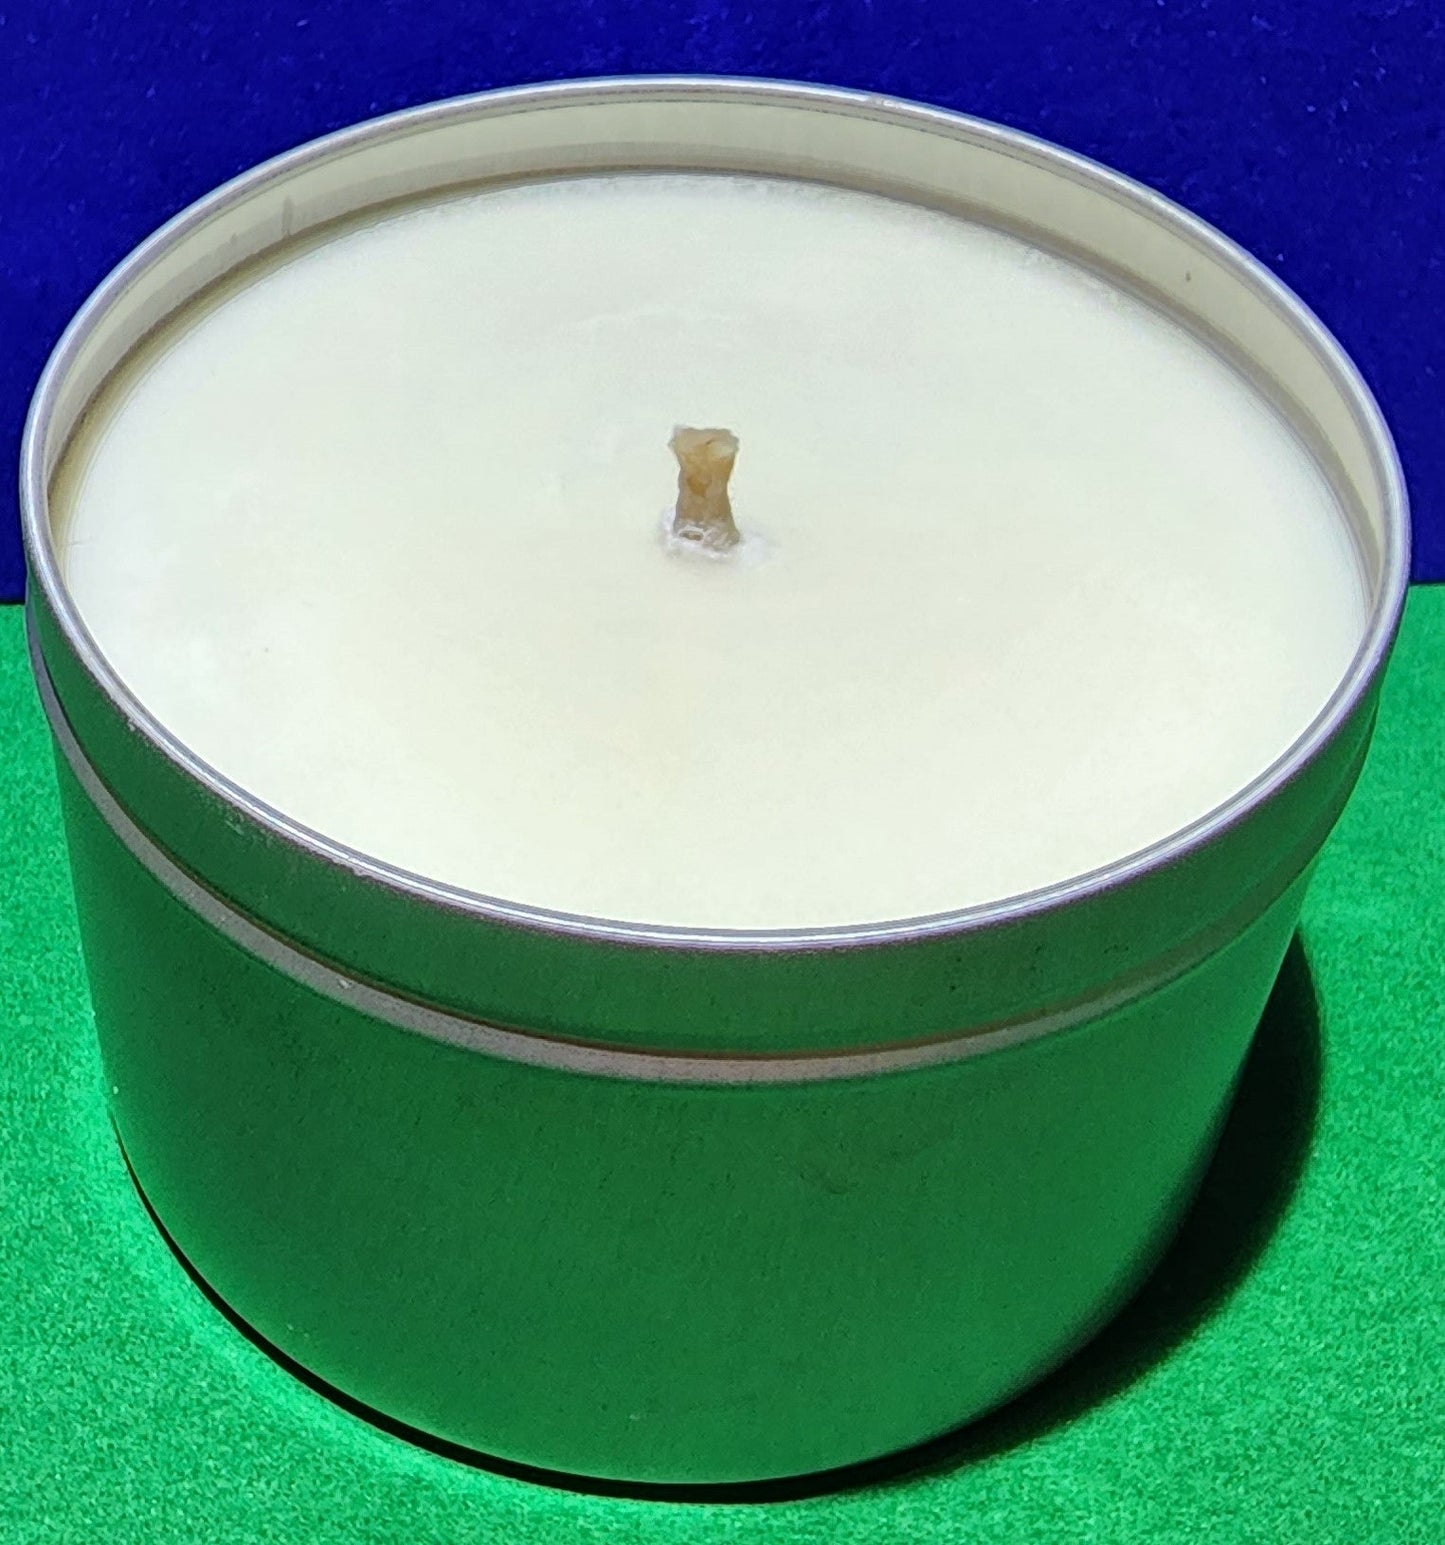 Gardenia Soy Candles & Wax Melts